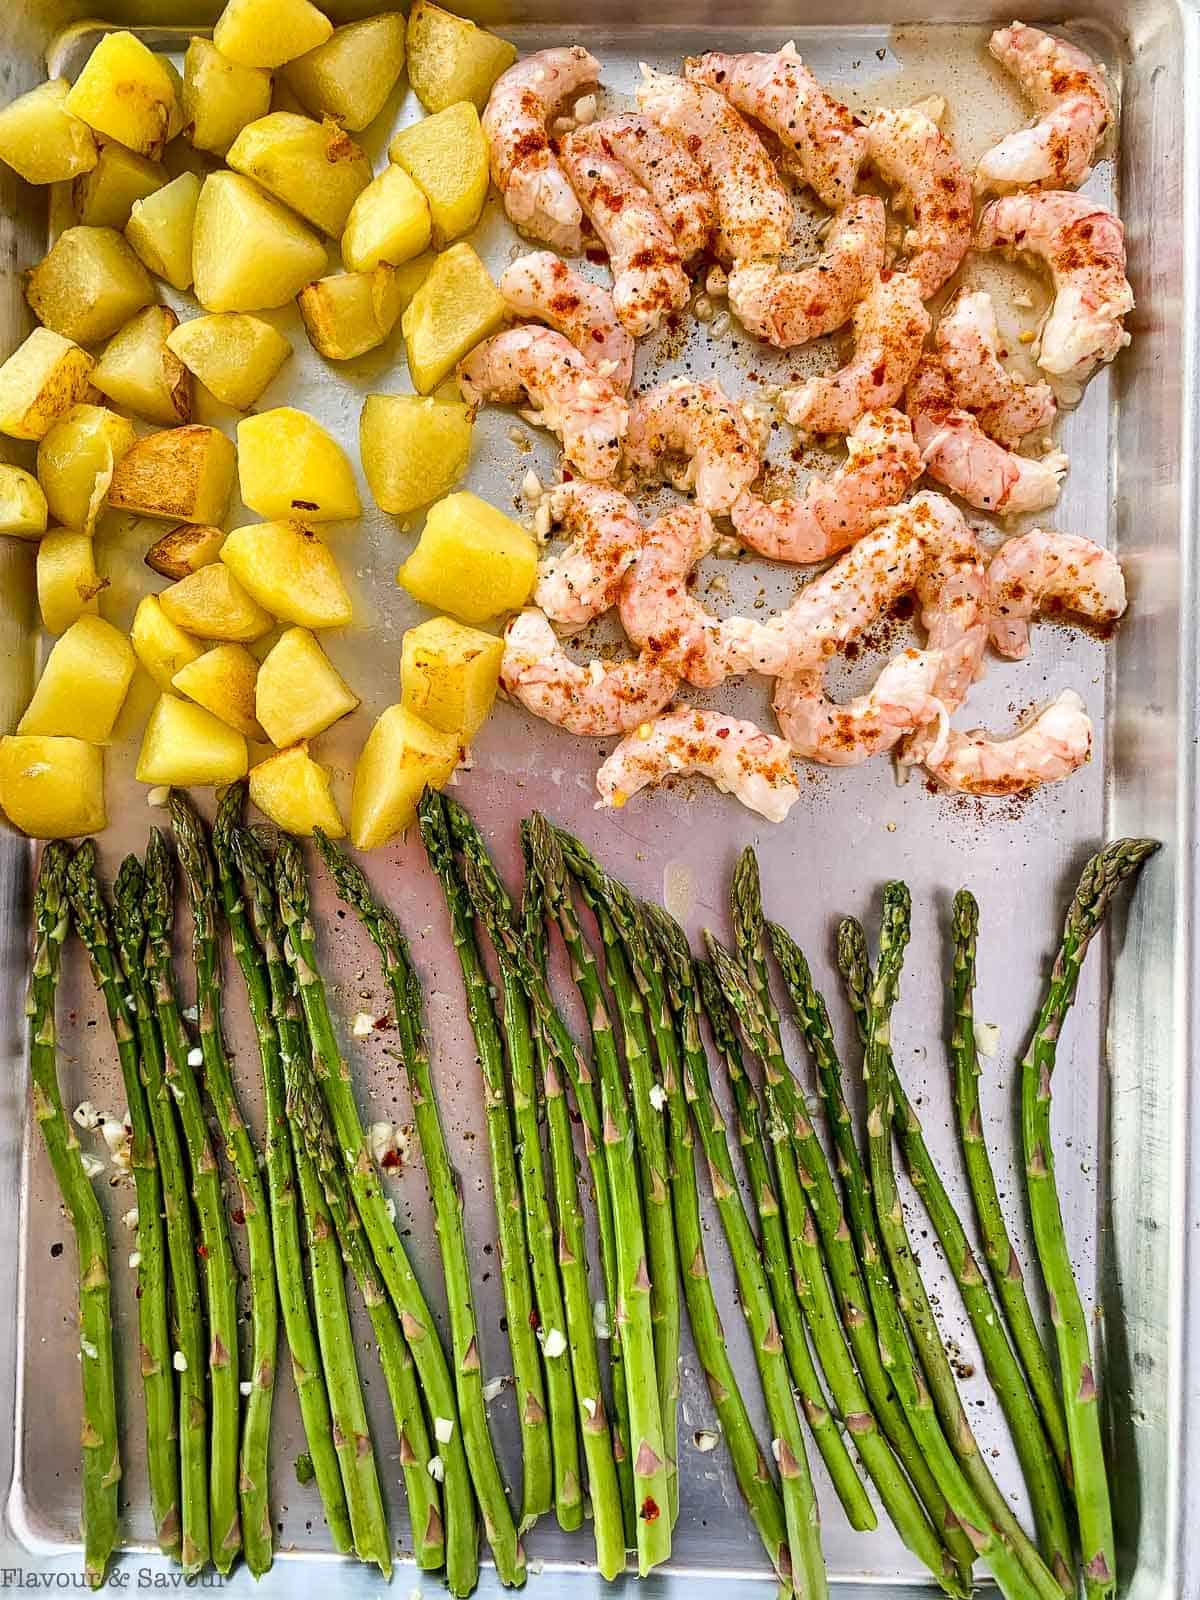 Sheet Pan Lemon Garlic Shrimp, asparagus and potatoes on a sheet pan ready to cook